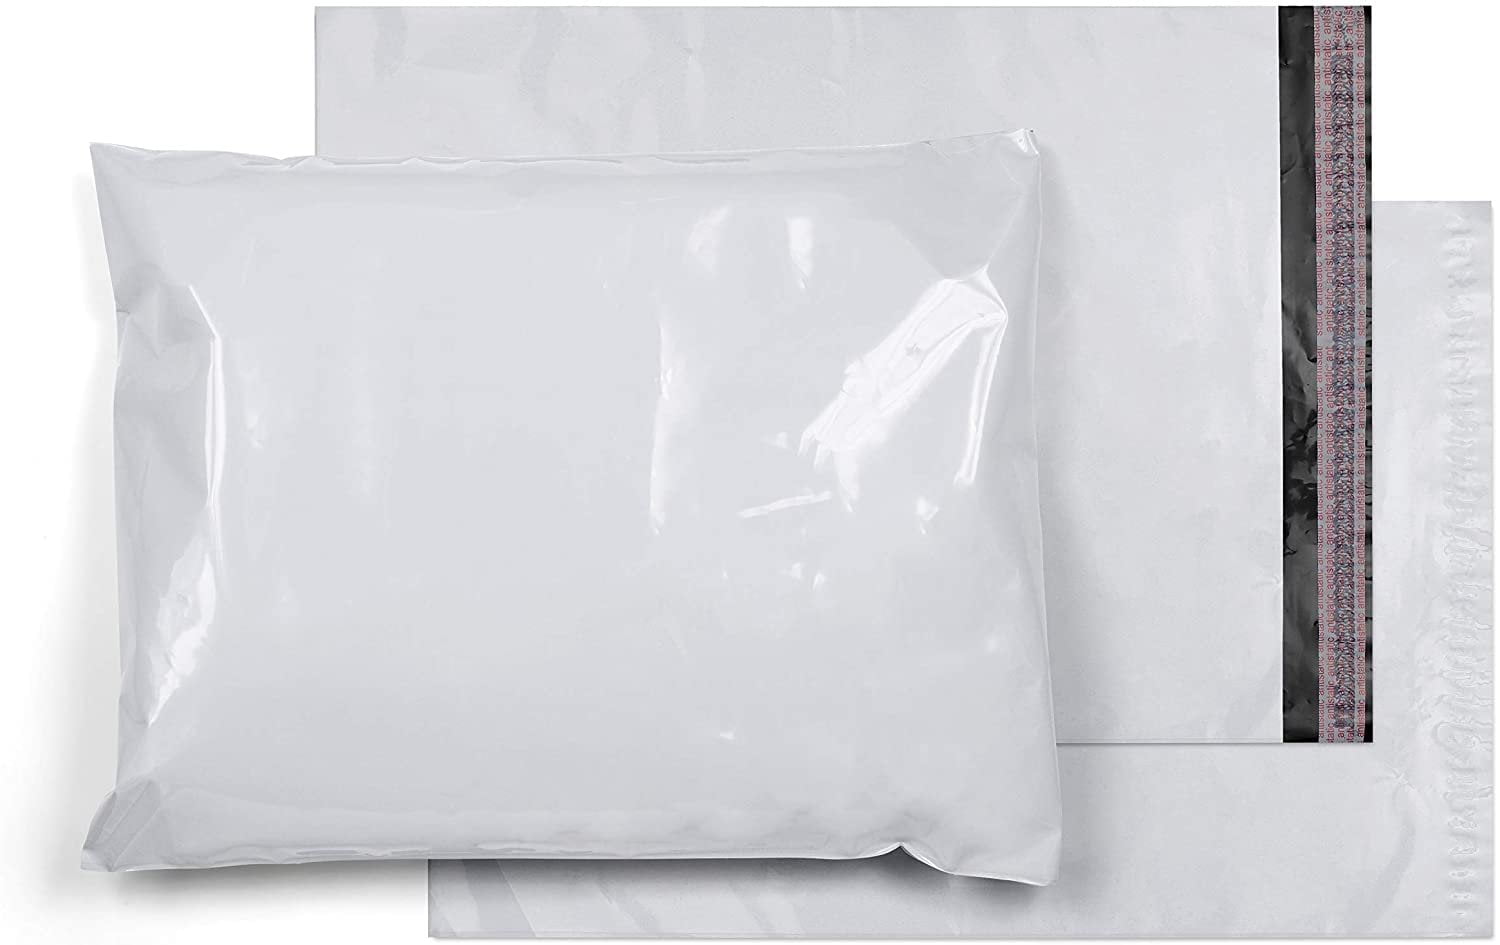 500 pcs 6"x9" 2.5MIL Poly Mailers Shipping Bags Envelopes Packaging Premium Bag